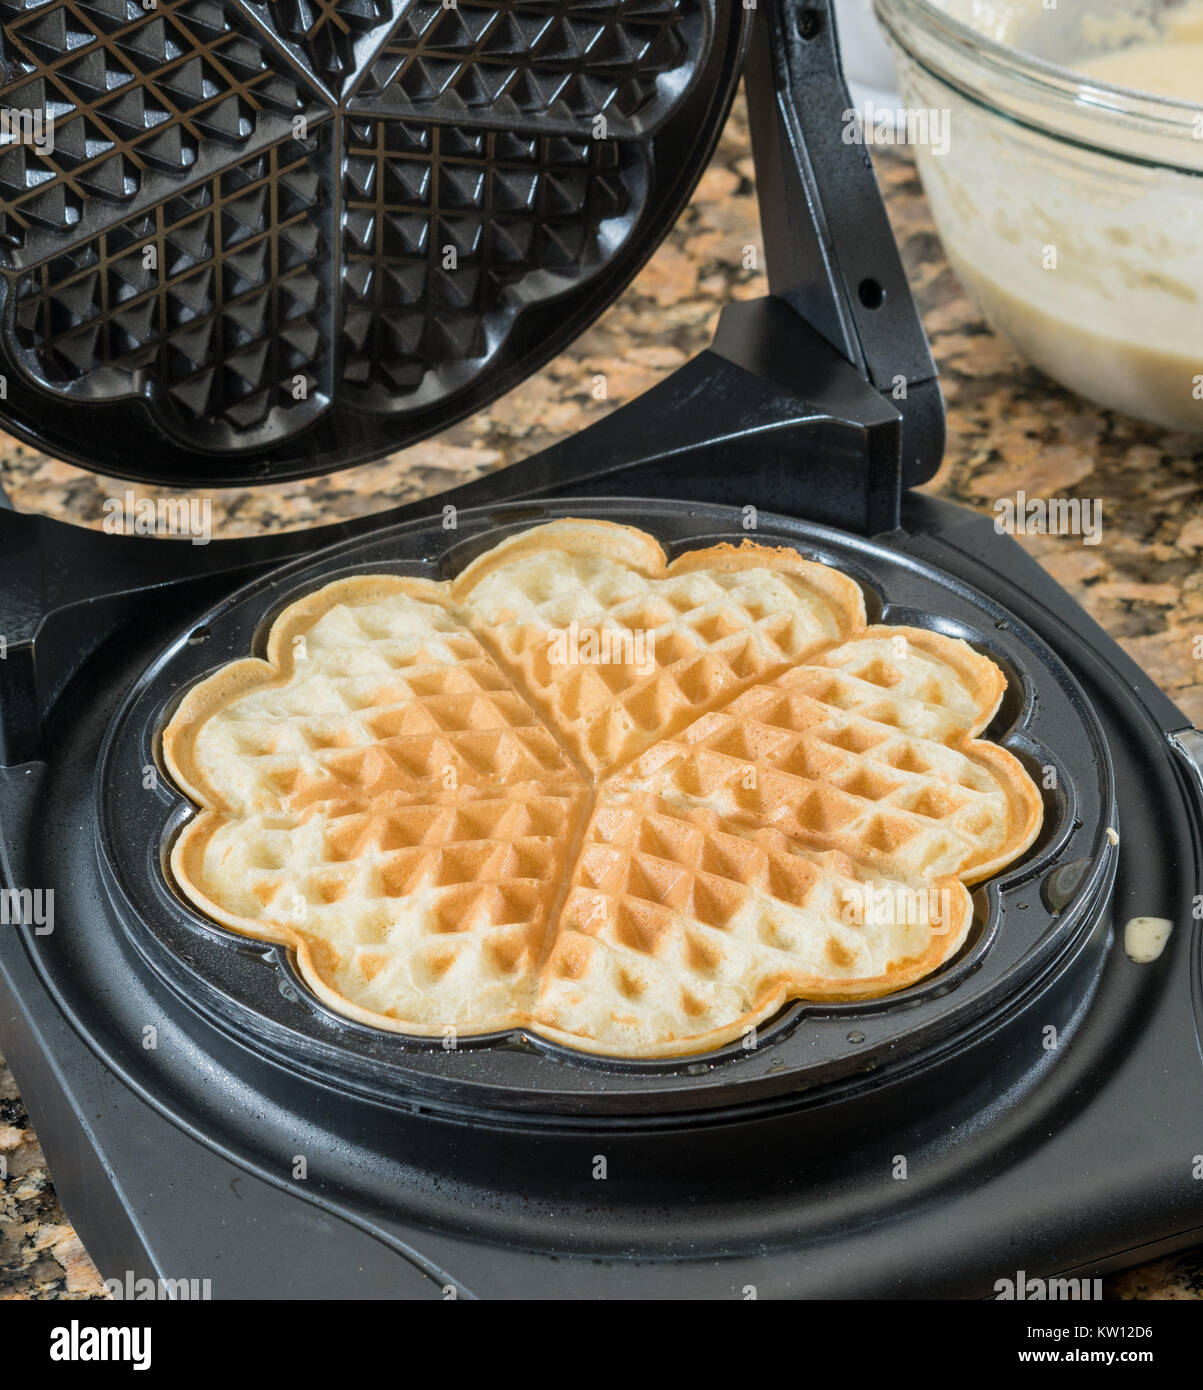 Maquina Para Hacer Waffles